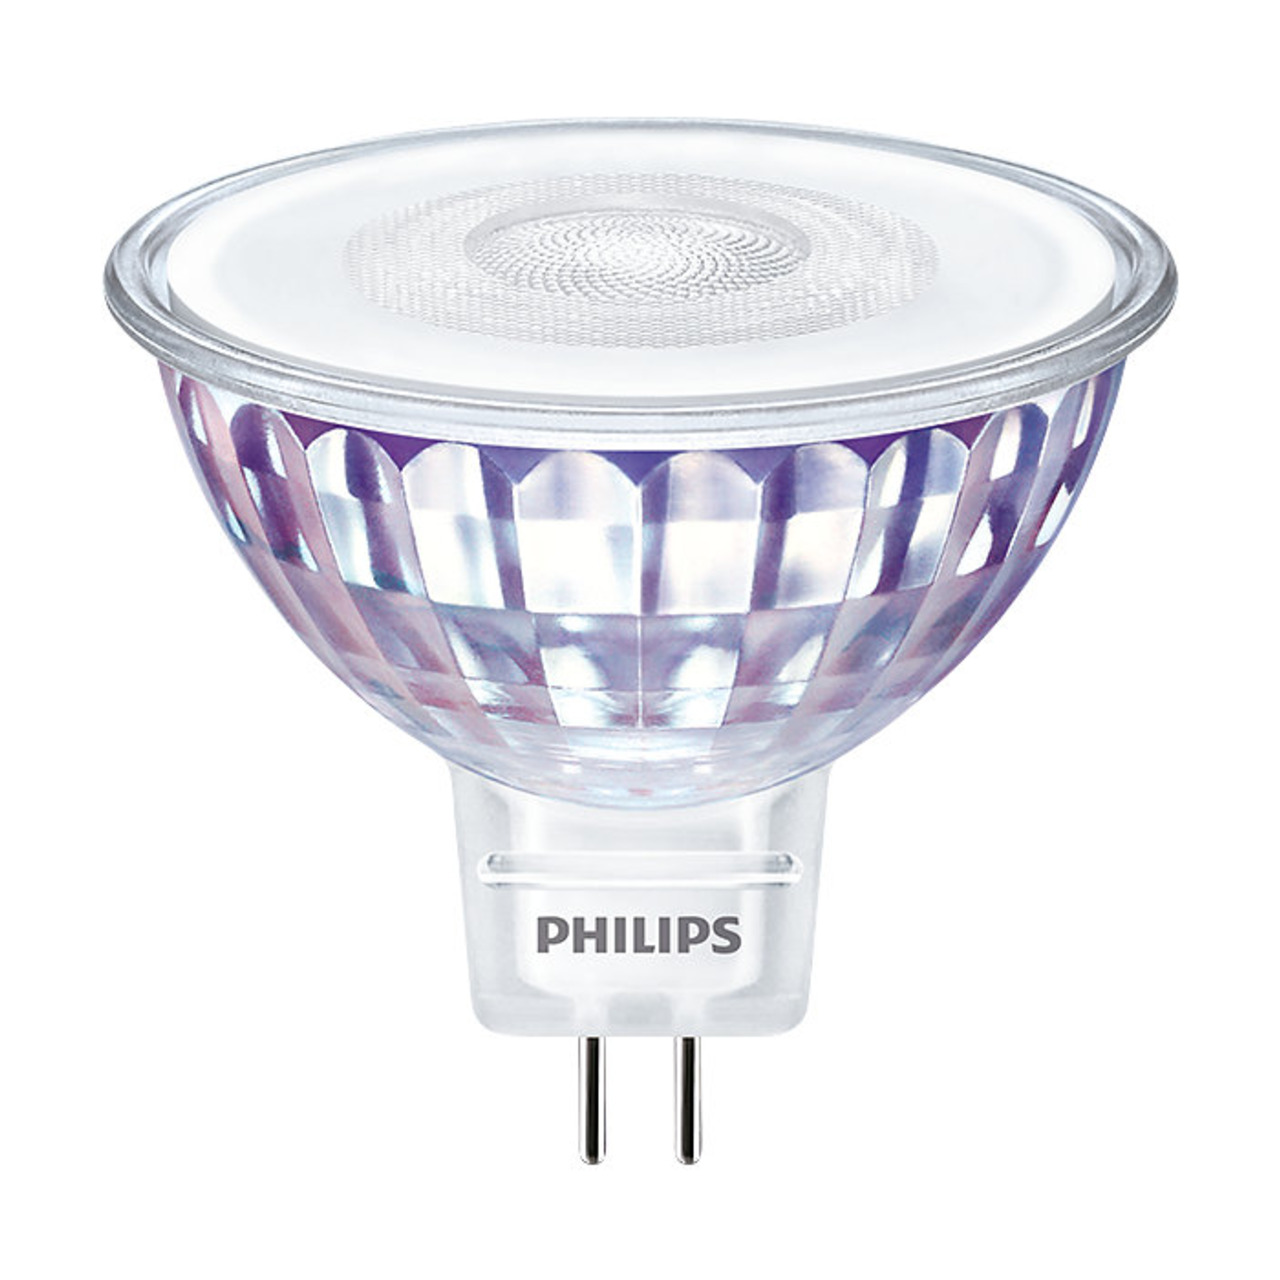 Philips 7-5-W-GU5-3-LED-Lampe Master LEDspot Value- MR16- 630 lm- warmweiss (3000 K)- 60- dimmbar unter Beleuchtung